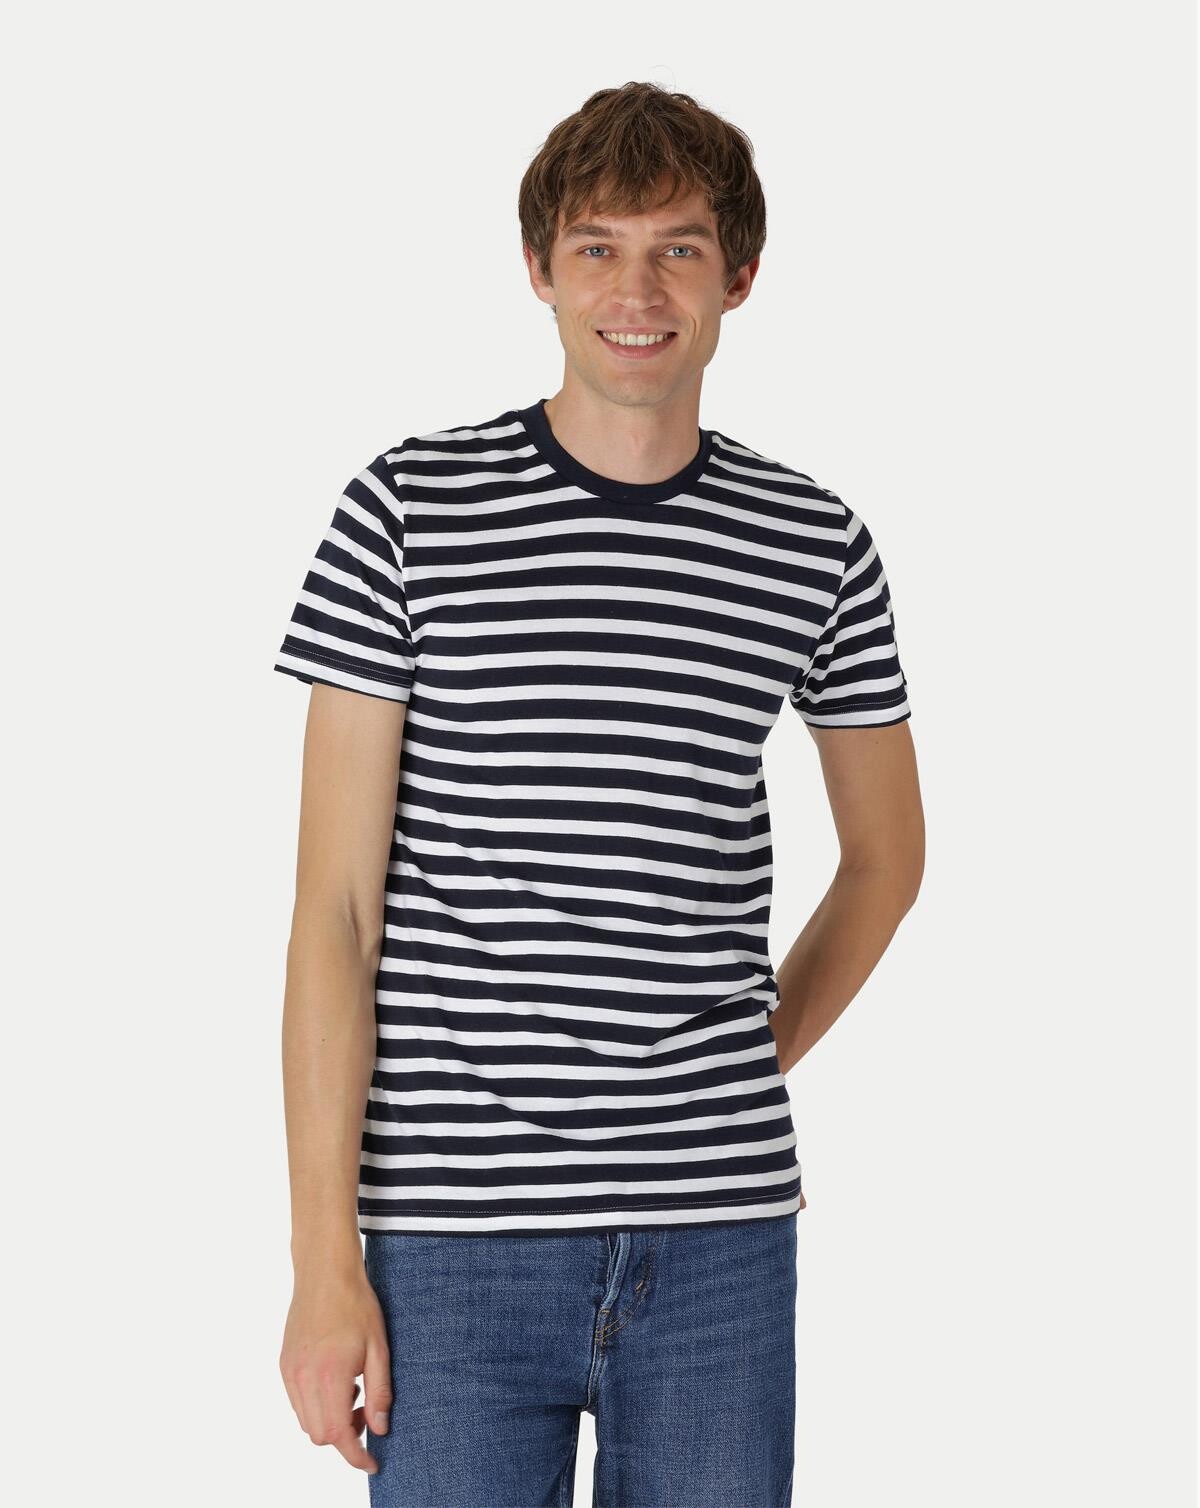 Neutral Økologisk T-shirt til - Tætsiddende (Blå / Hvid stribet, XL)